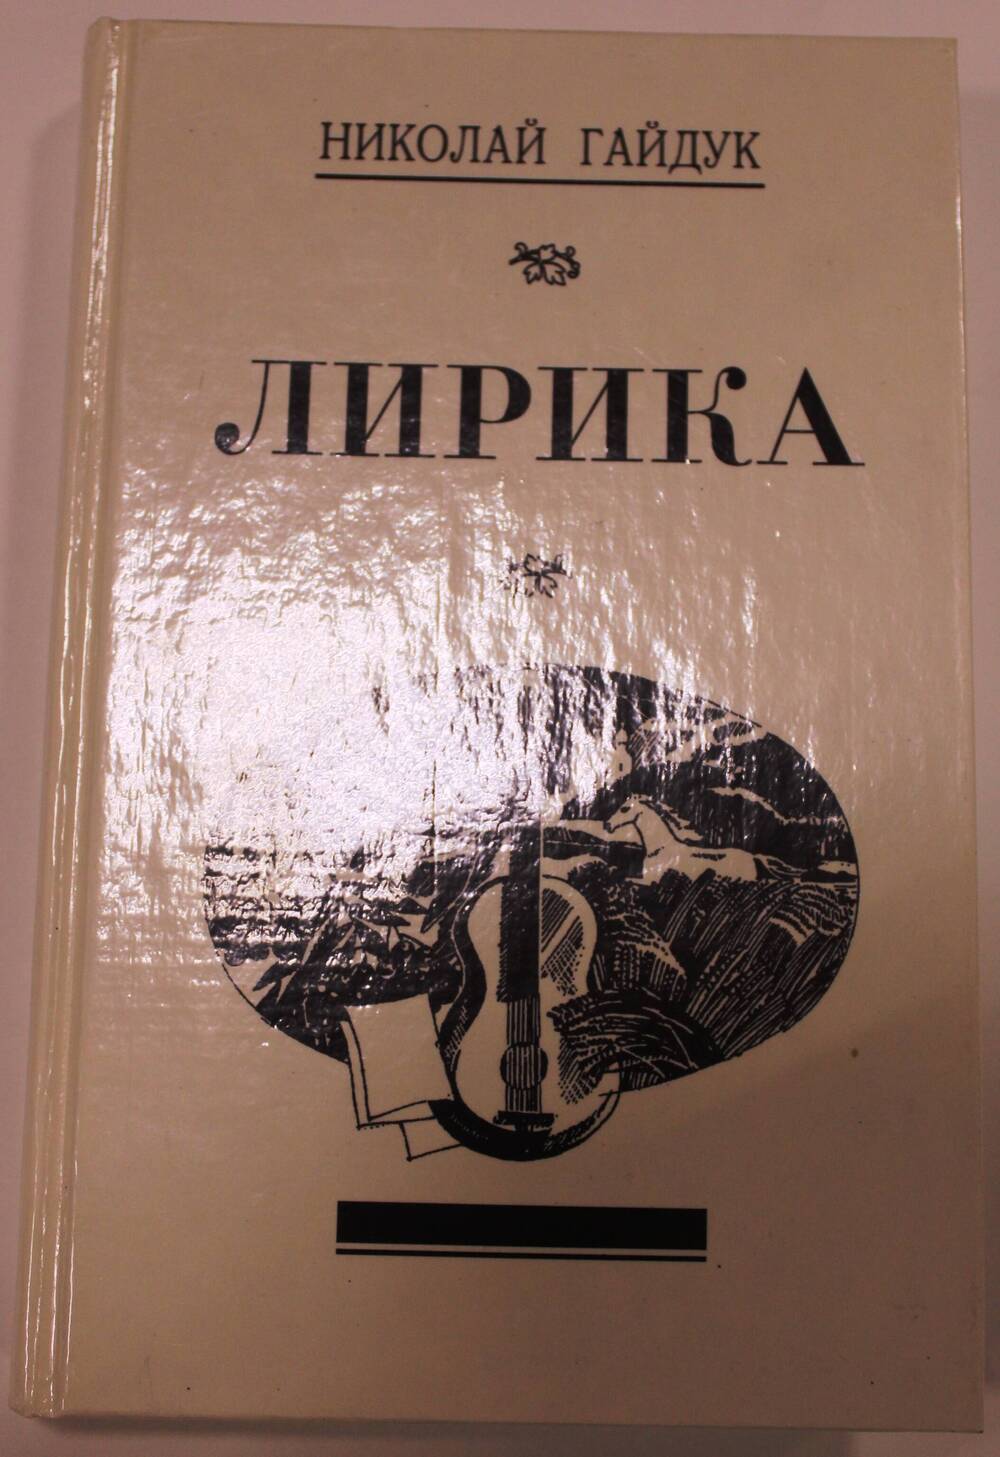 Книга стихов Лирика. Автор Николай Гайдук.